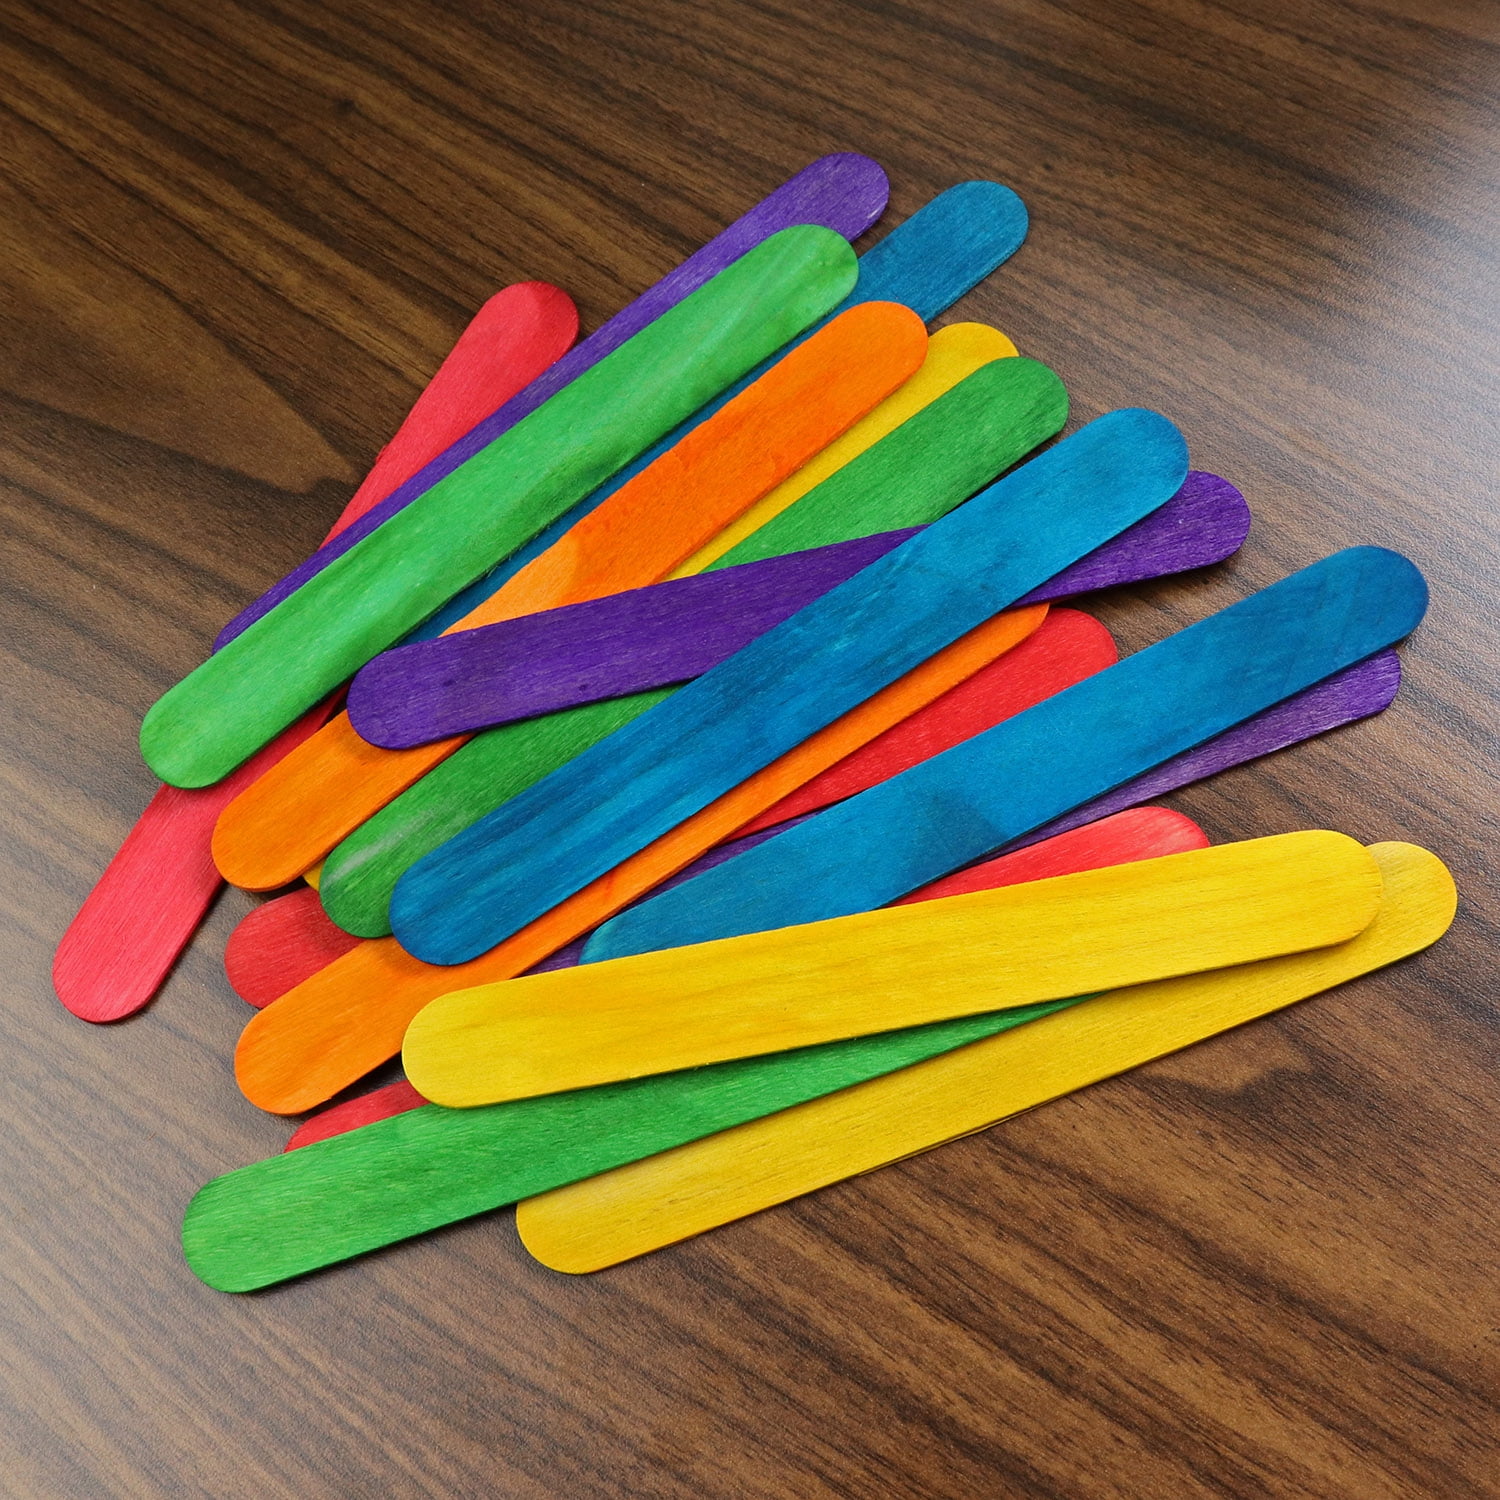 100 Sticks - Jumbo Wood Craft Popsicle Sticks 6 inch Black